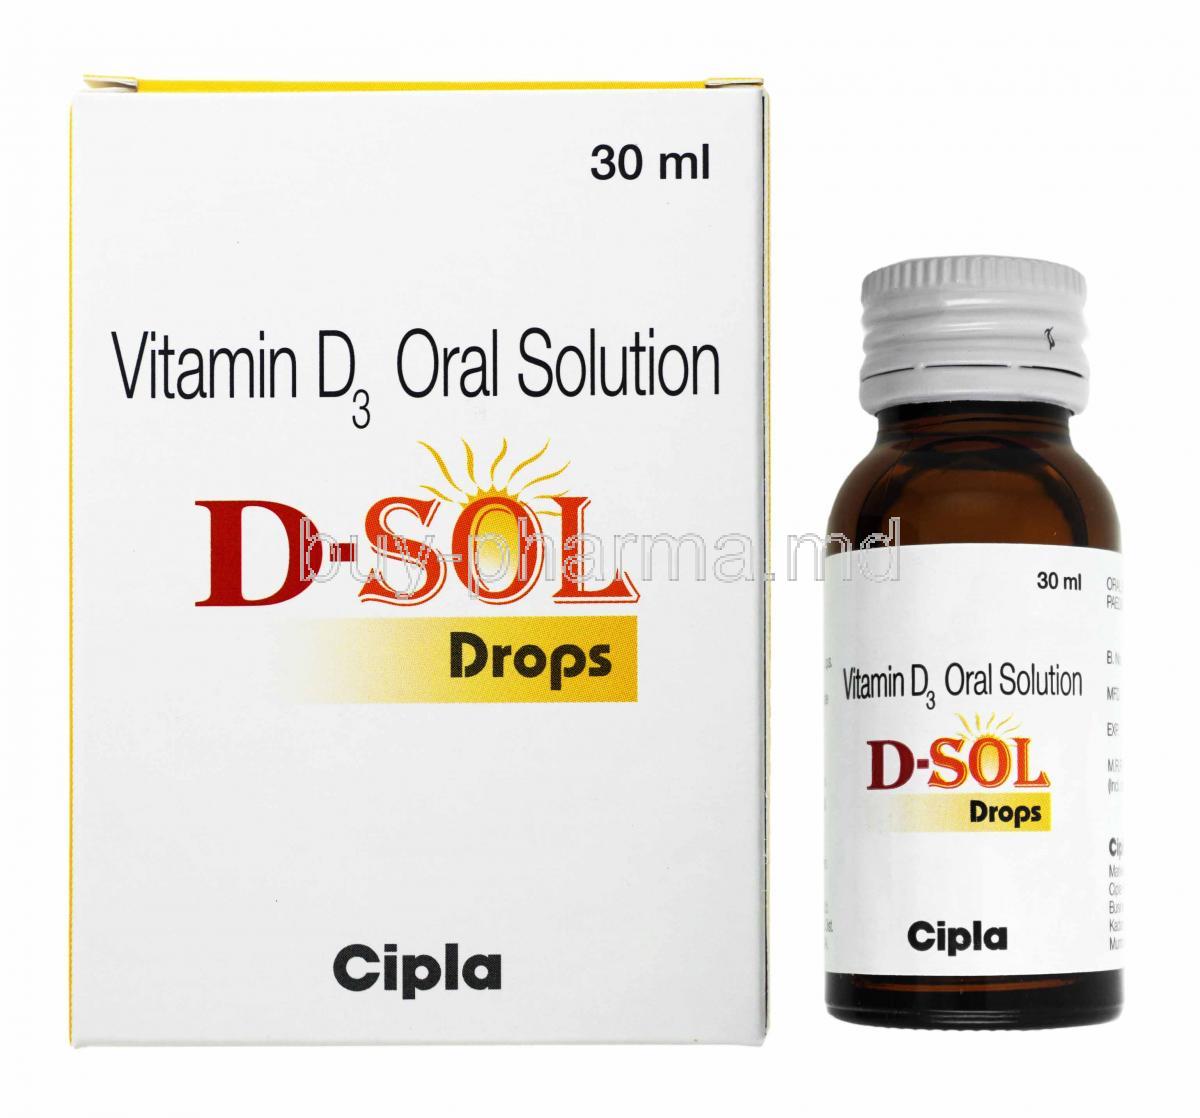 D-sol Drop, Cholecalciferol box and bottle